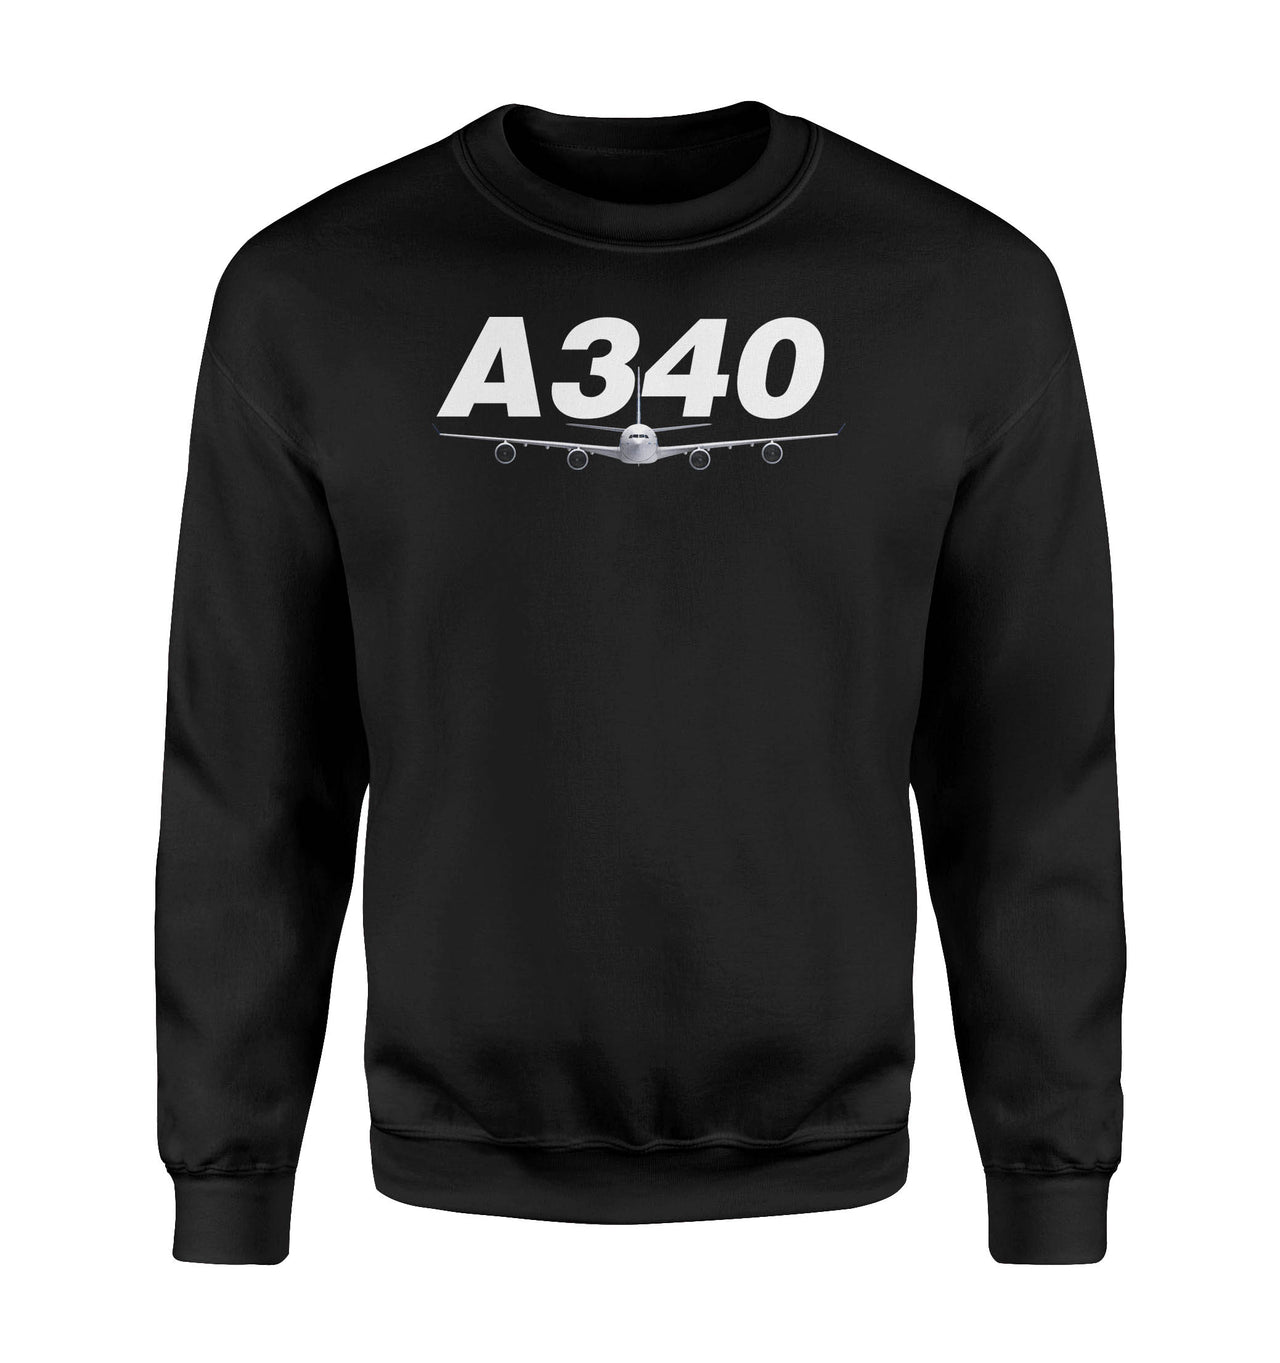 Super Airbus A340 Designed Sweatshirts